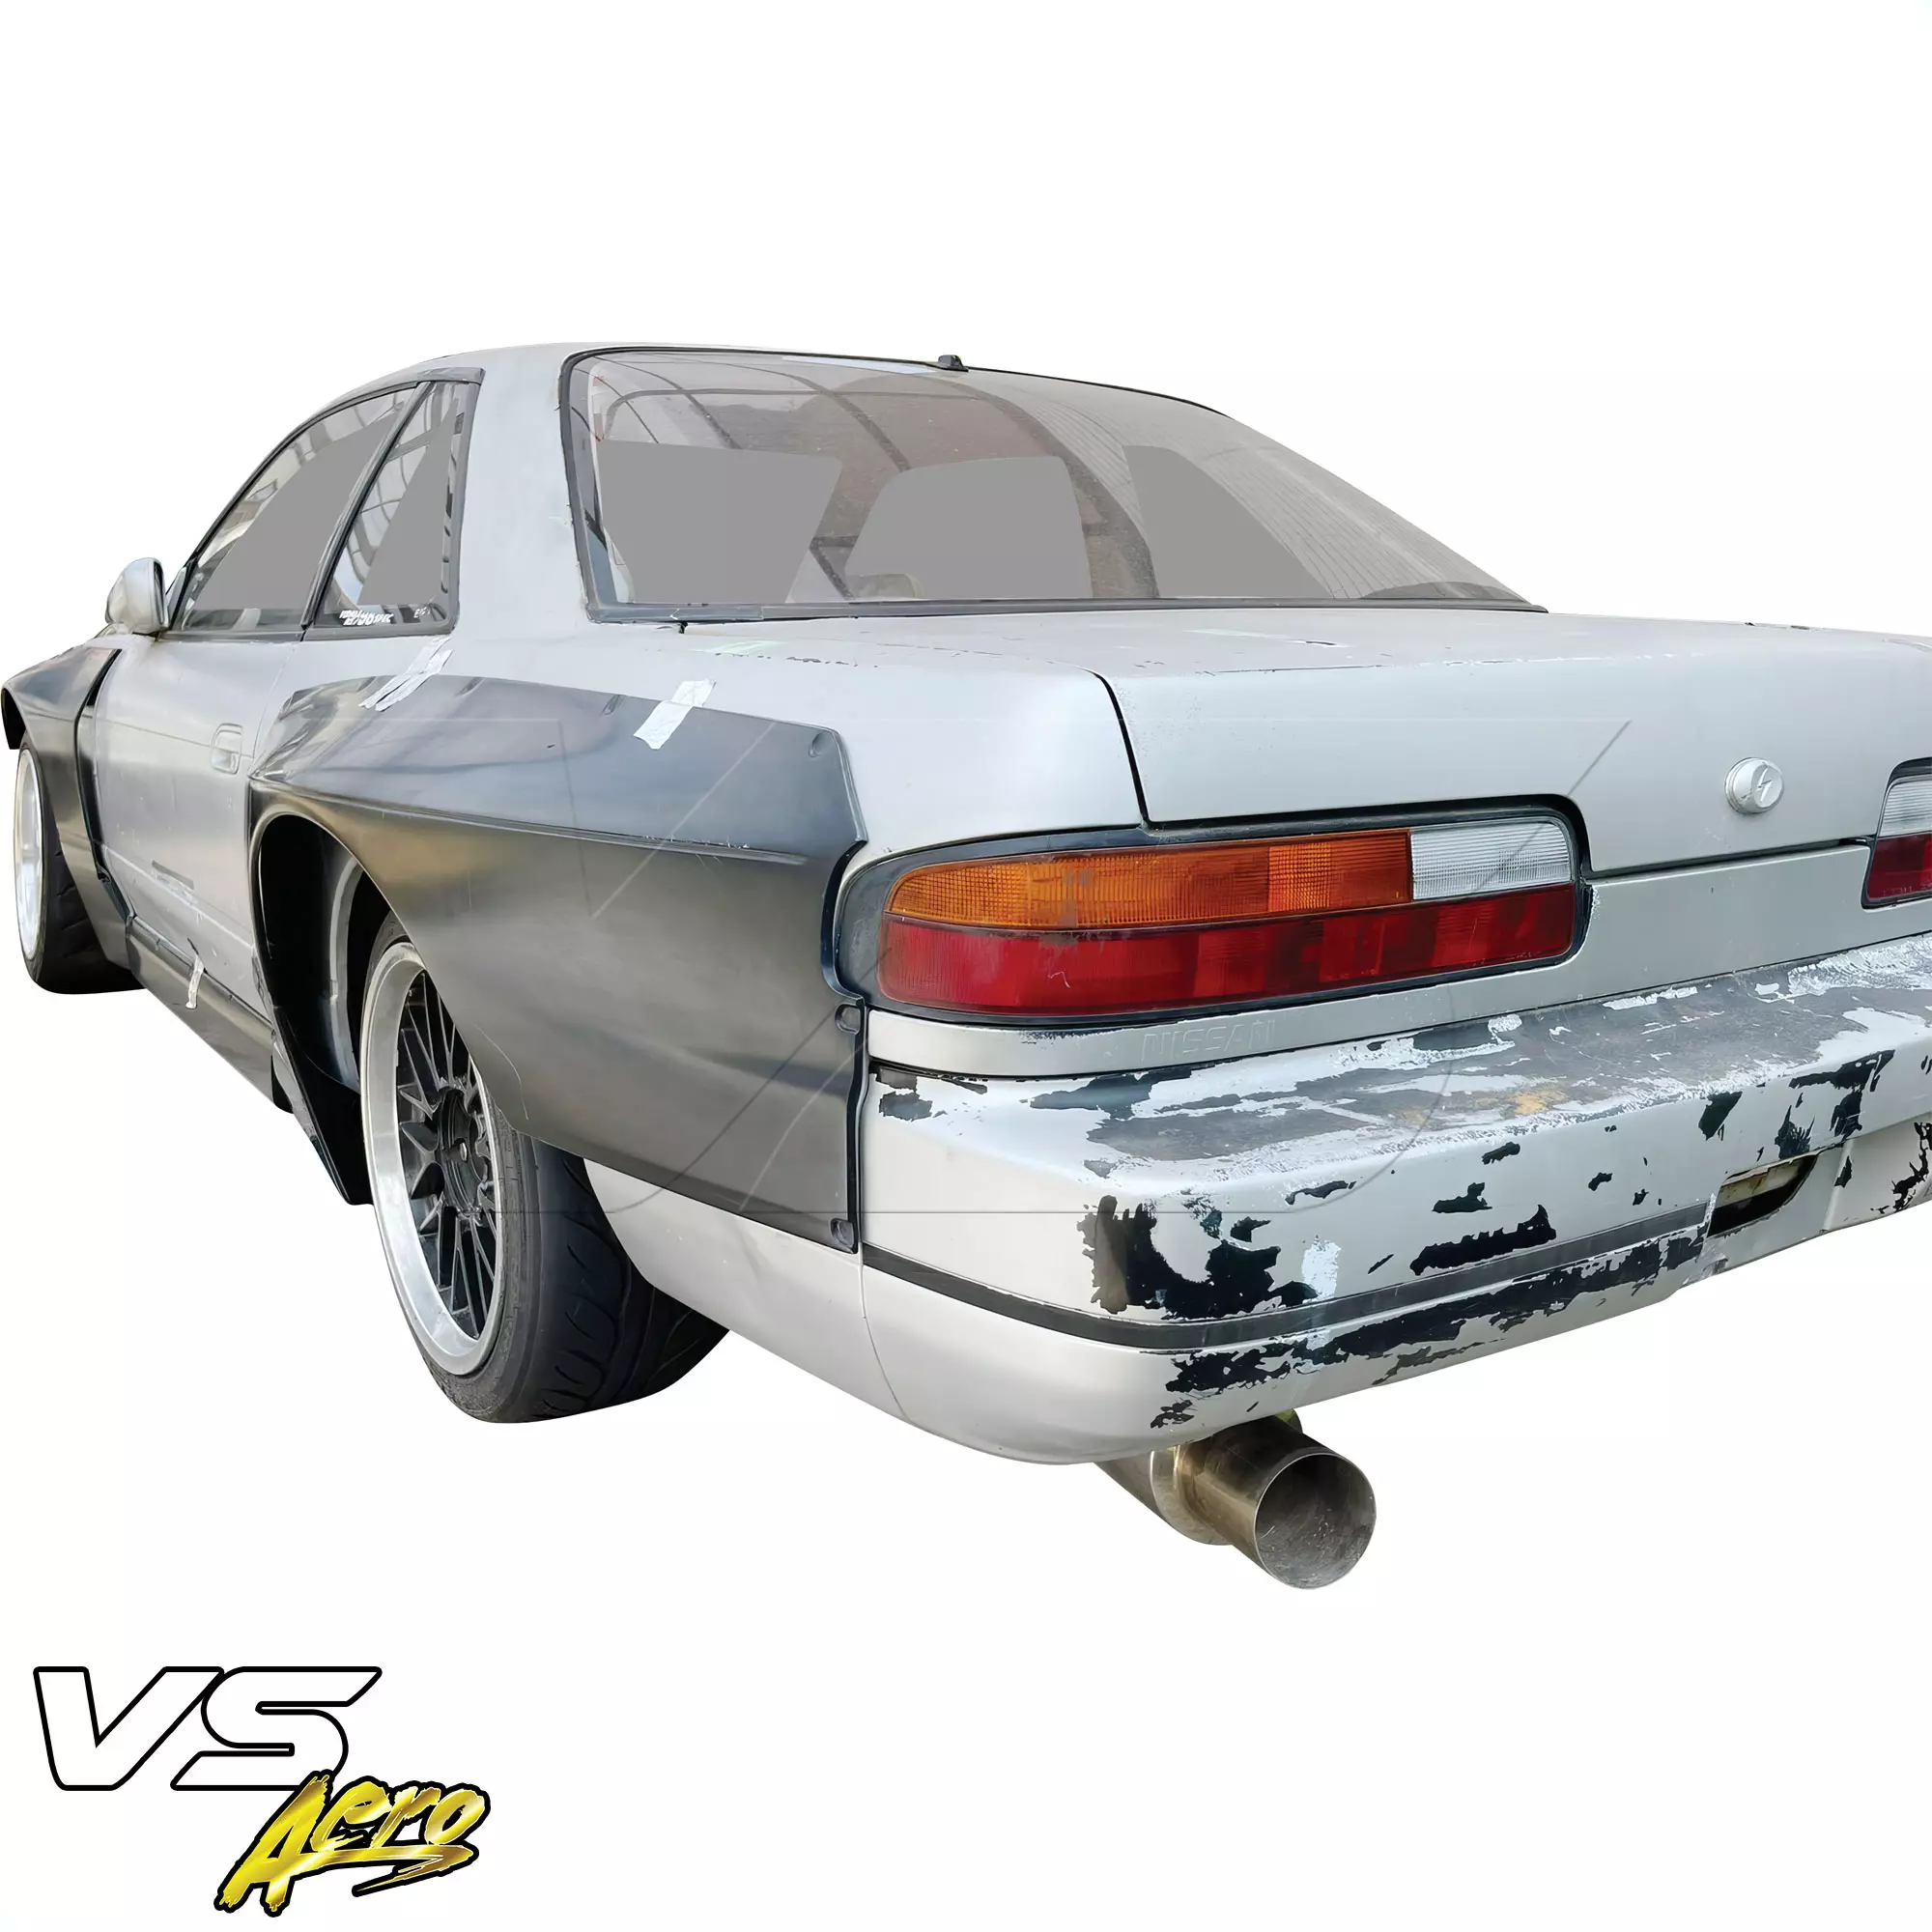 VSaero FRP TKYO v3 Wide Body 110mm Fenders (rear) > Nissan Silvia S13 1989-1994 > 2dr Coupe - Image 17